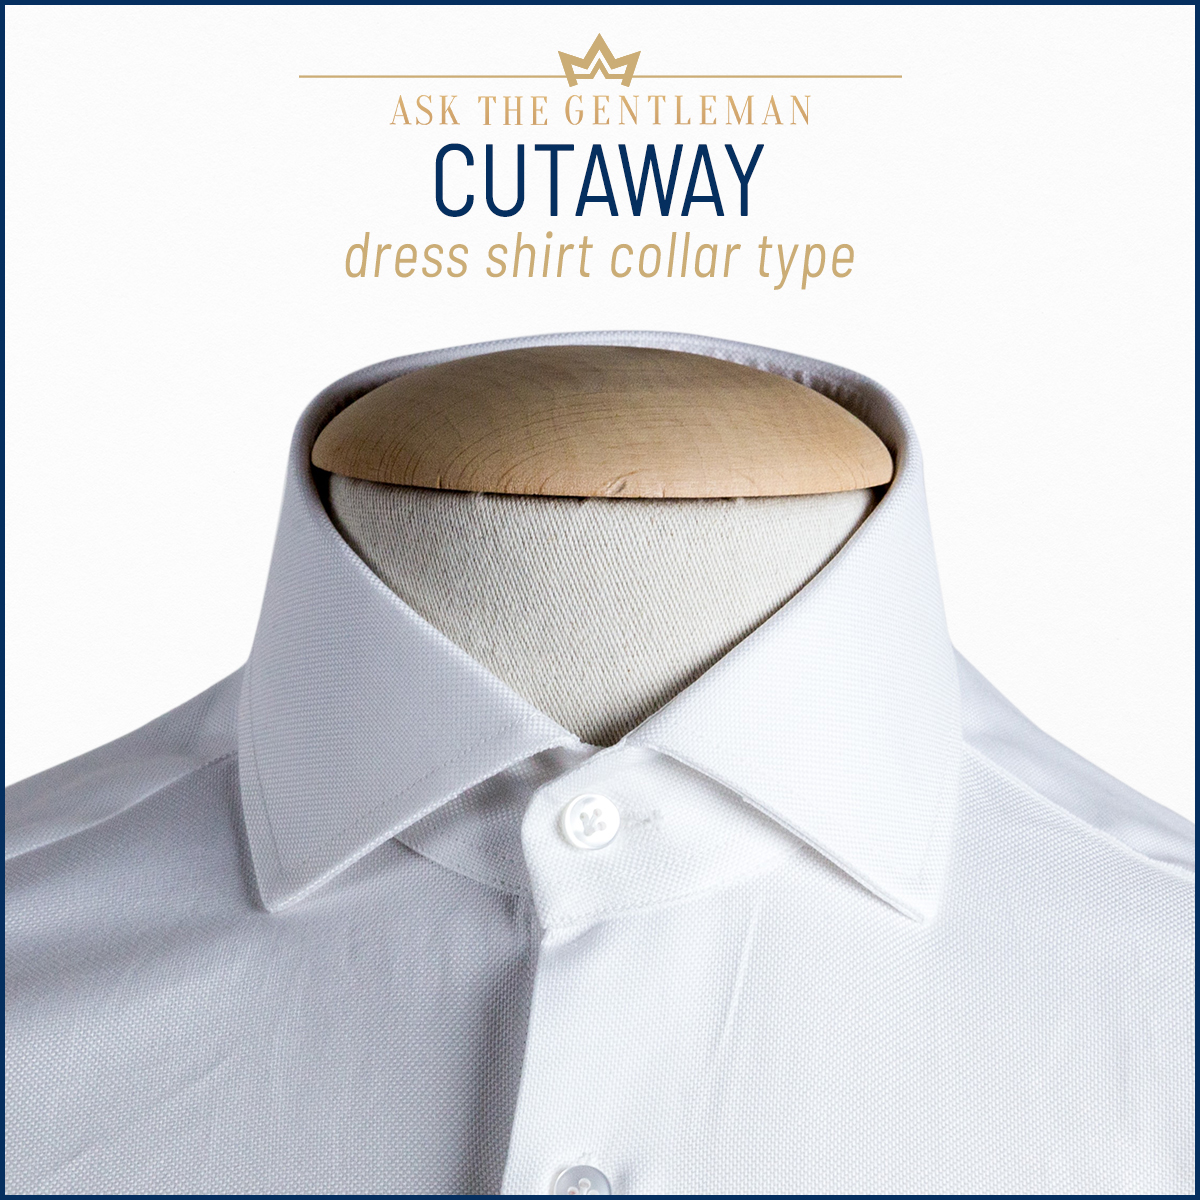 Cutaway dress shirt collar type